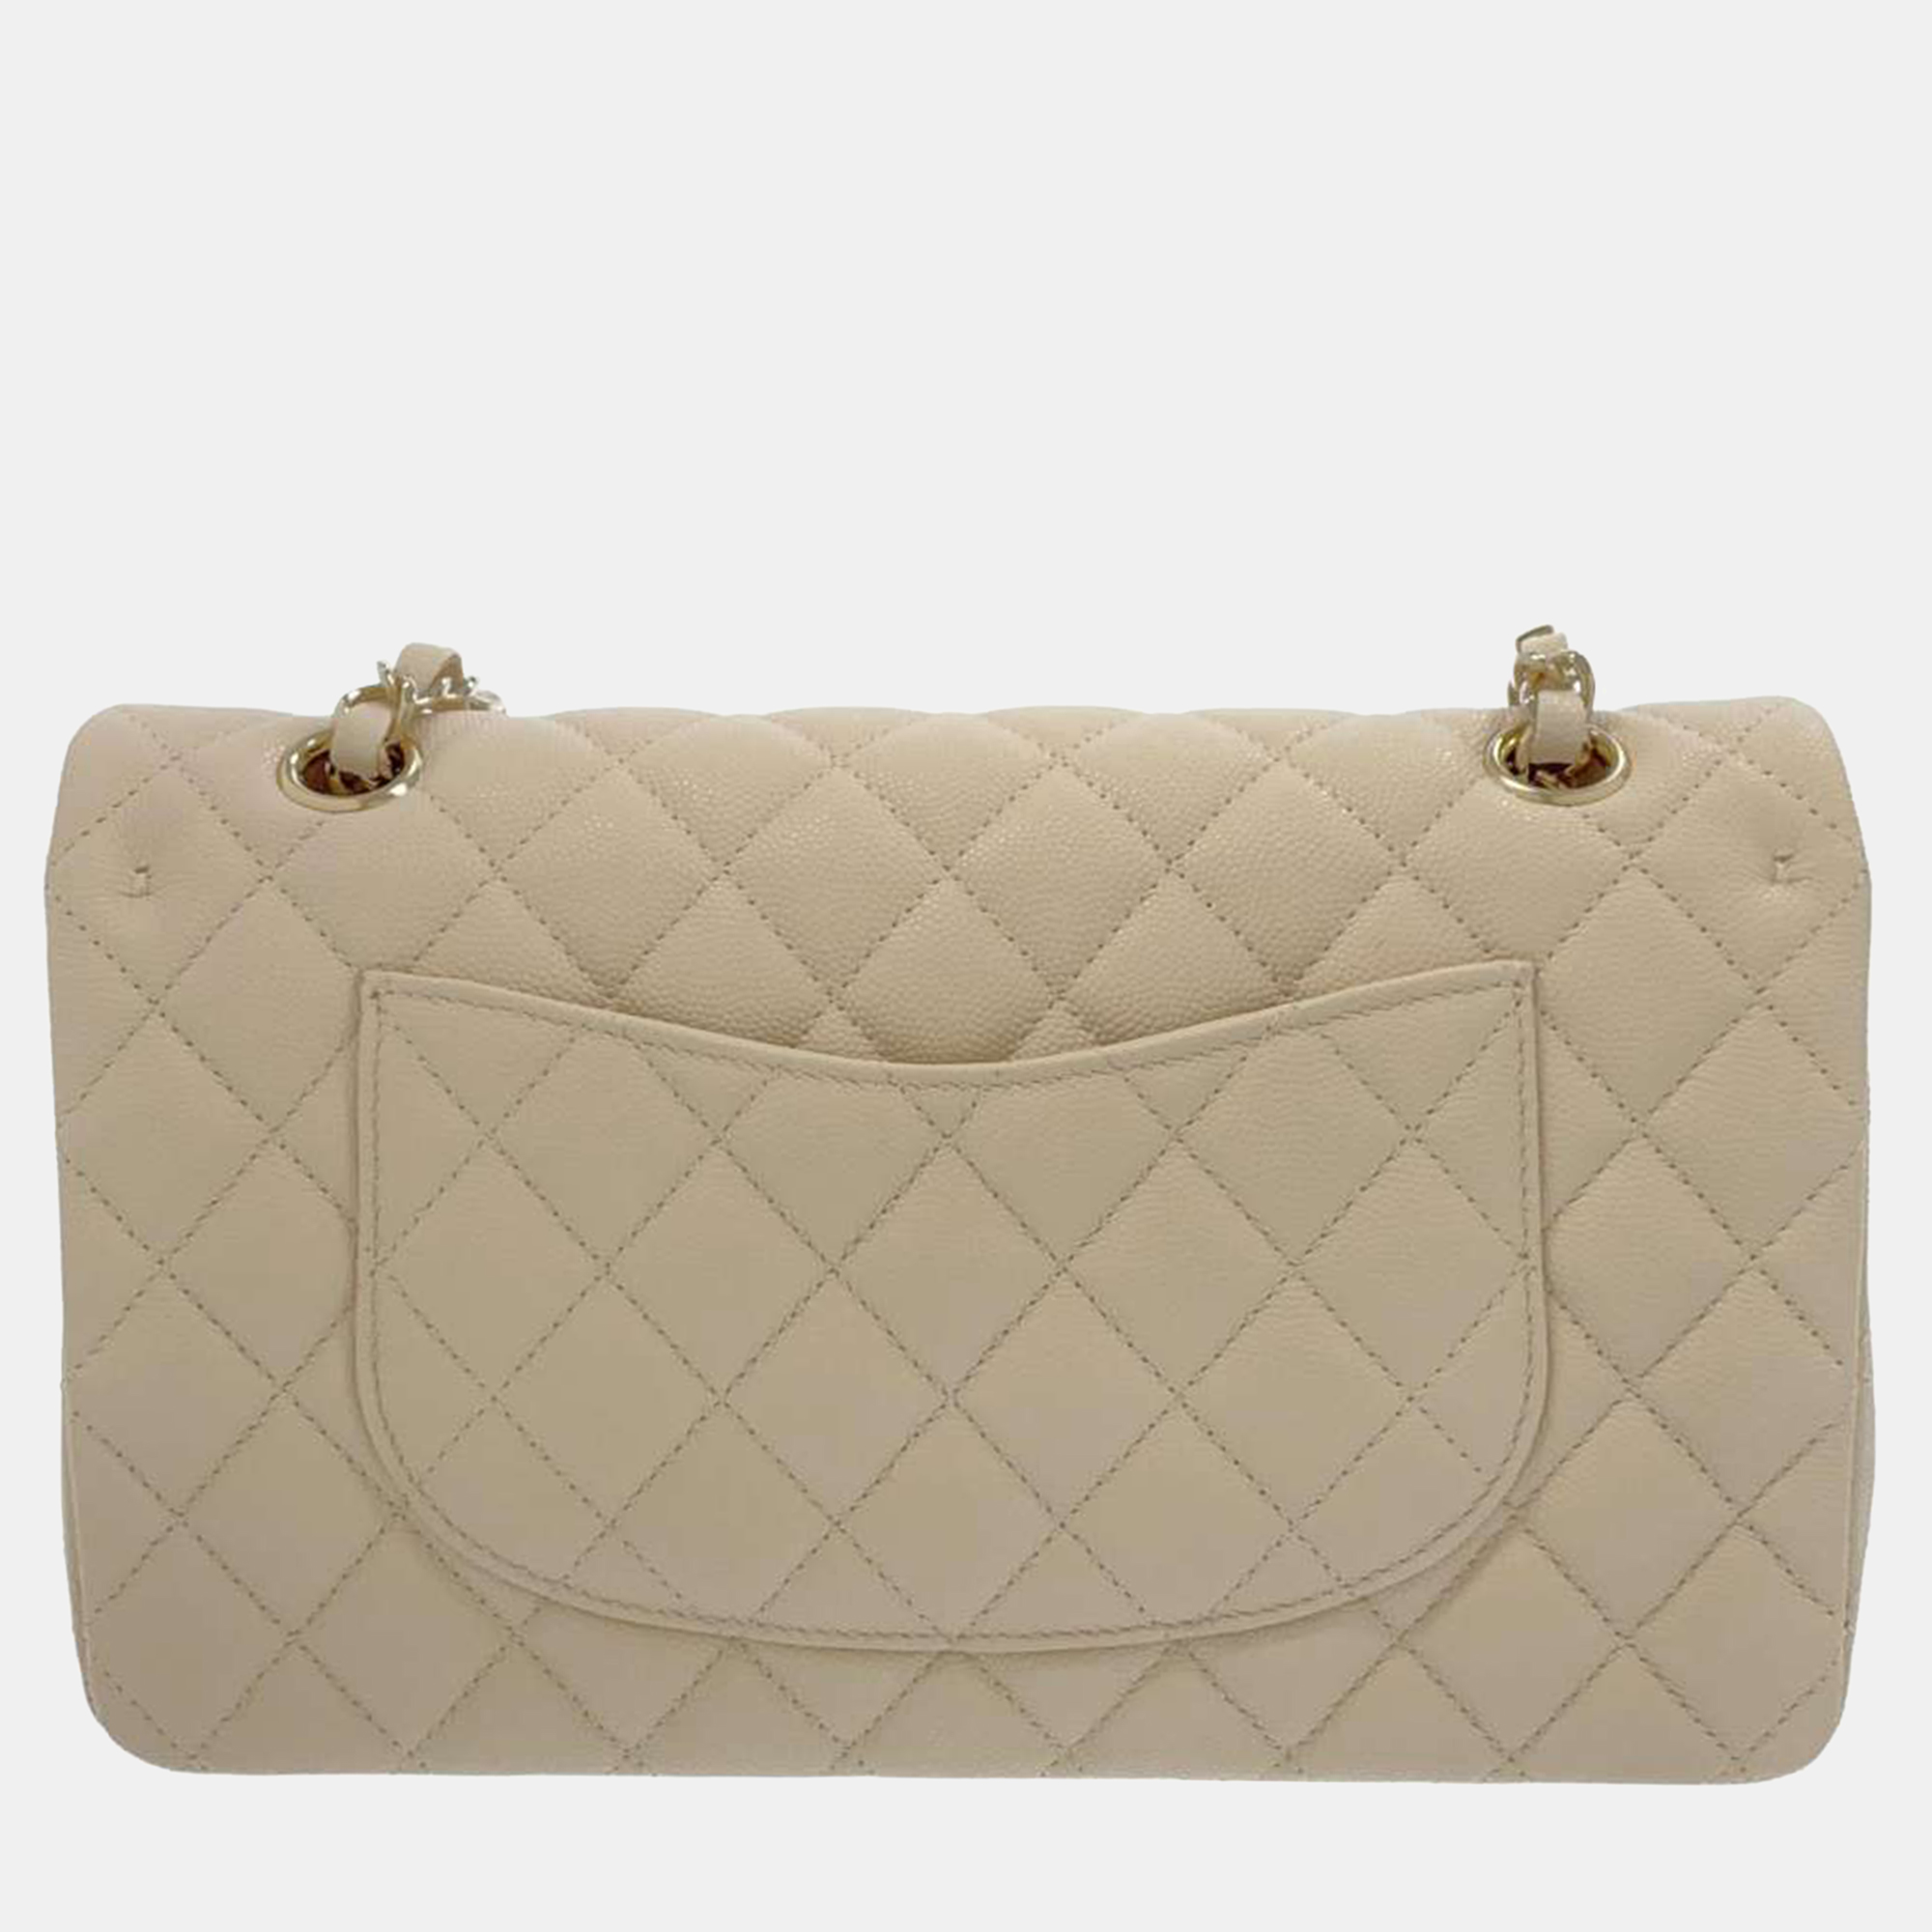 Chanel Beige Leather Classic Double Flap Shoulder Bag